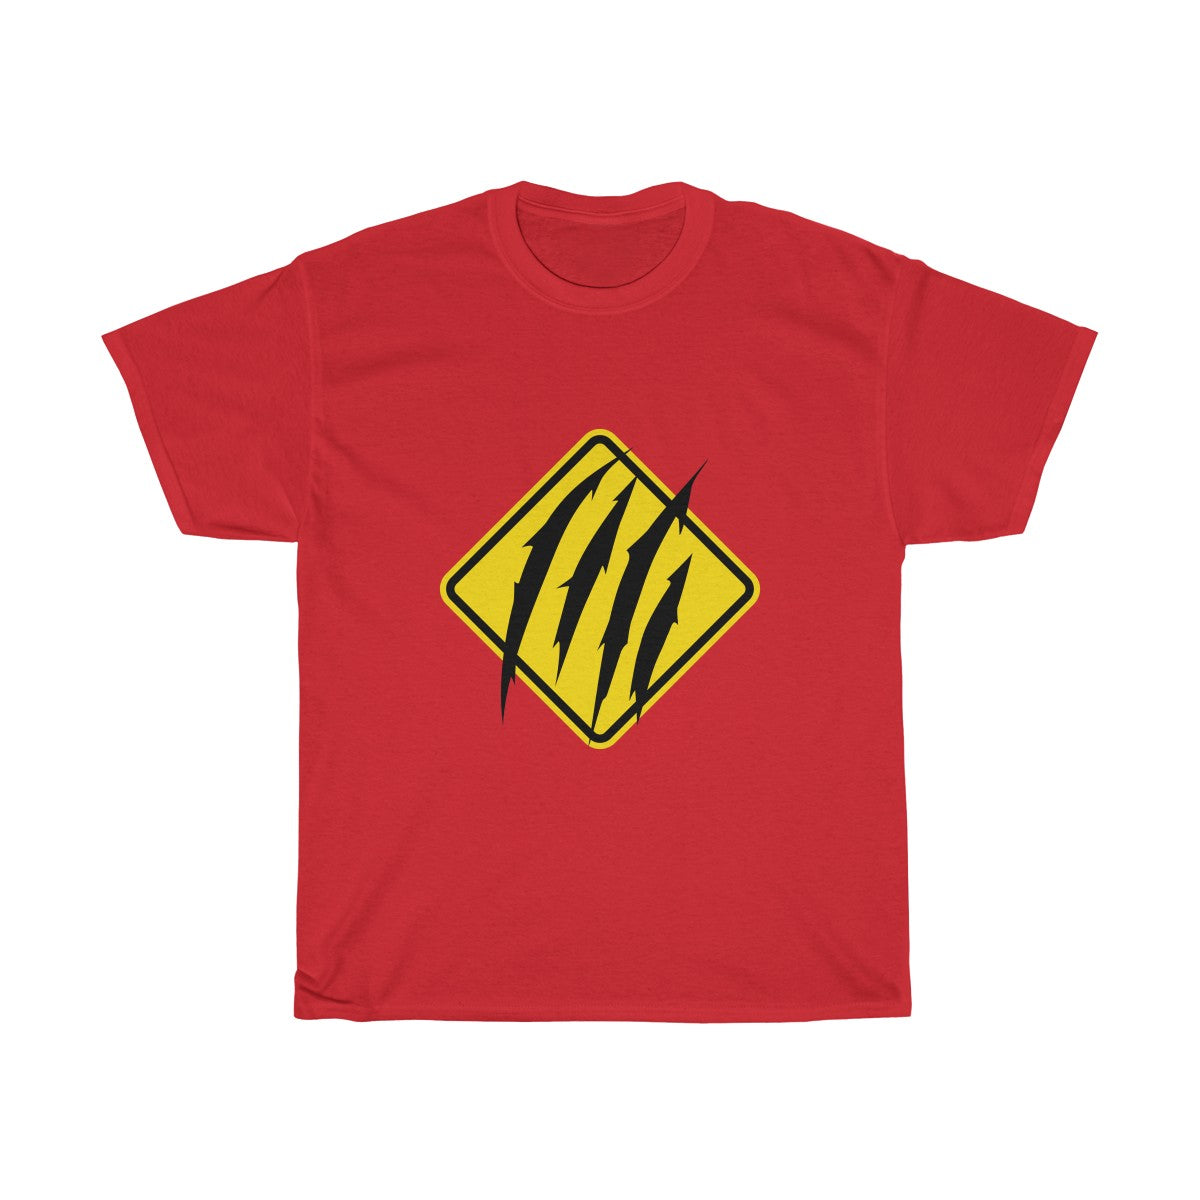 Scratch Warning - T-Shirt T-Shirt Wexon Red S 